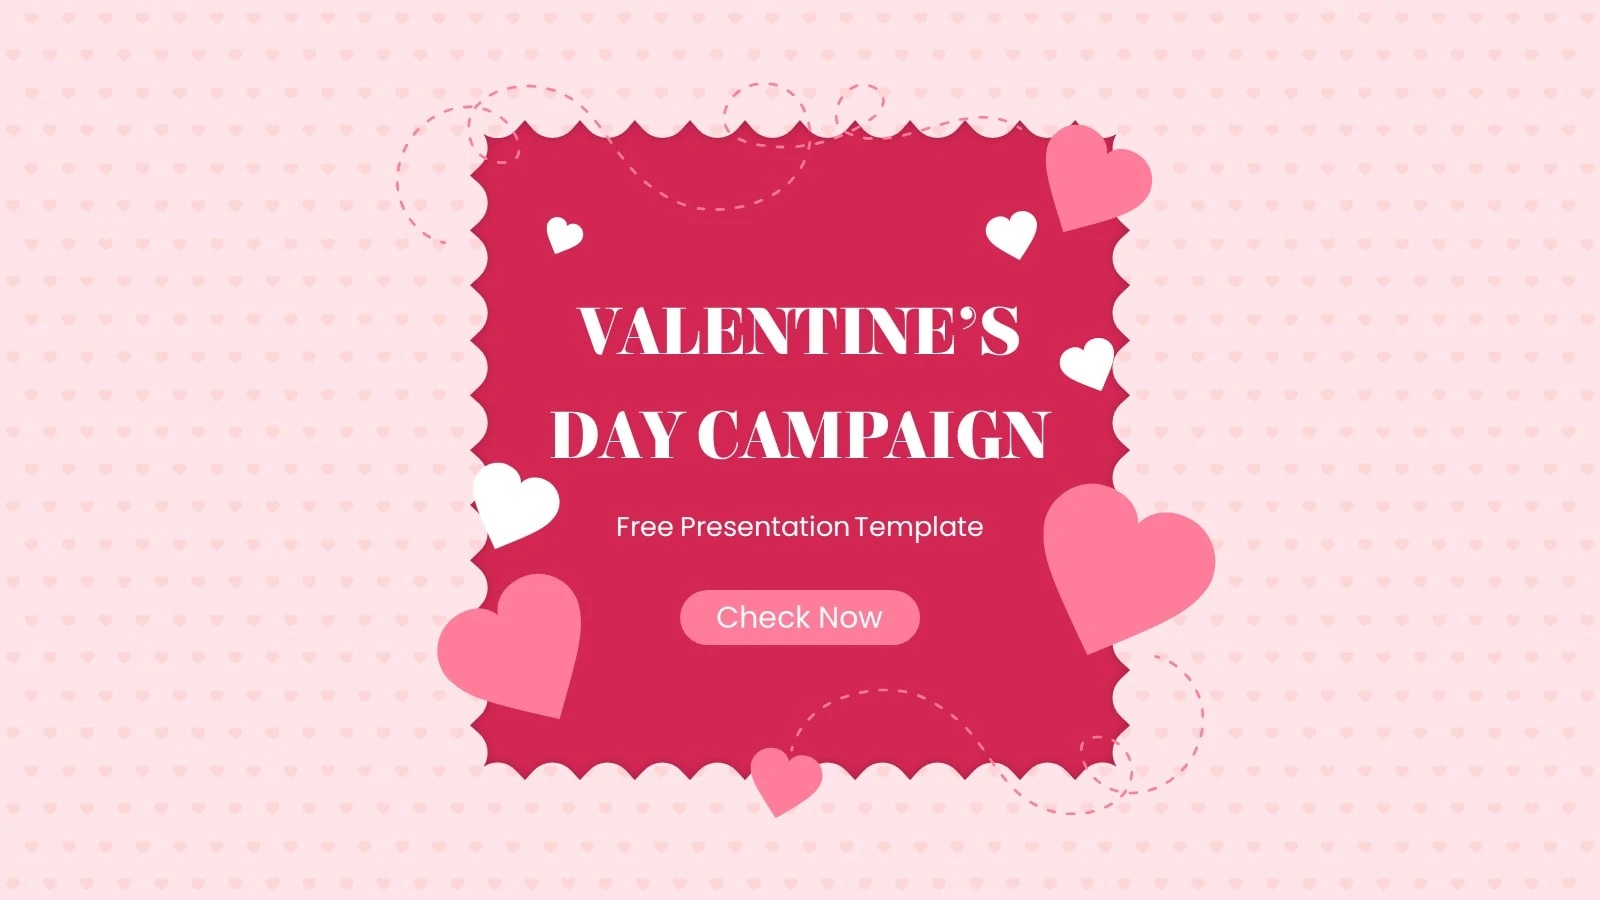 Valentine’s Day Campaign Presentation